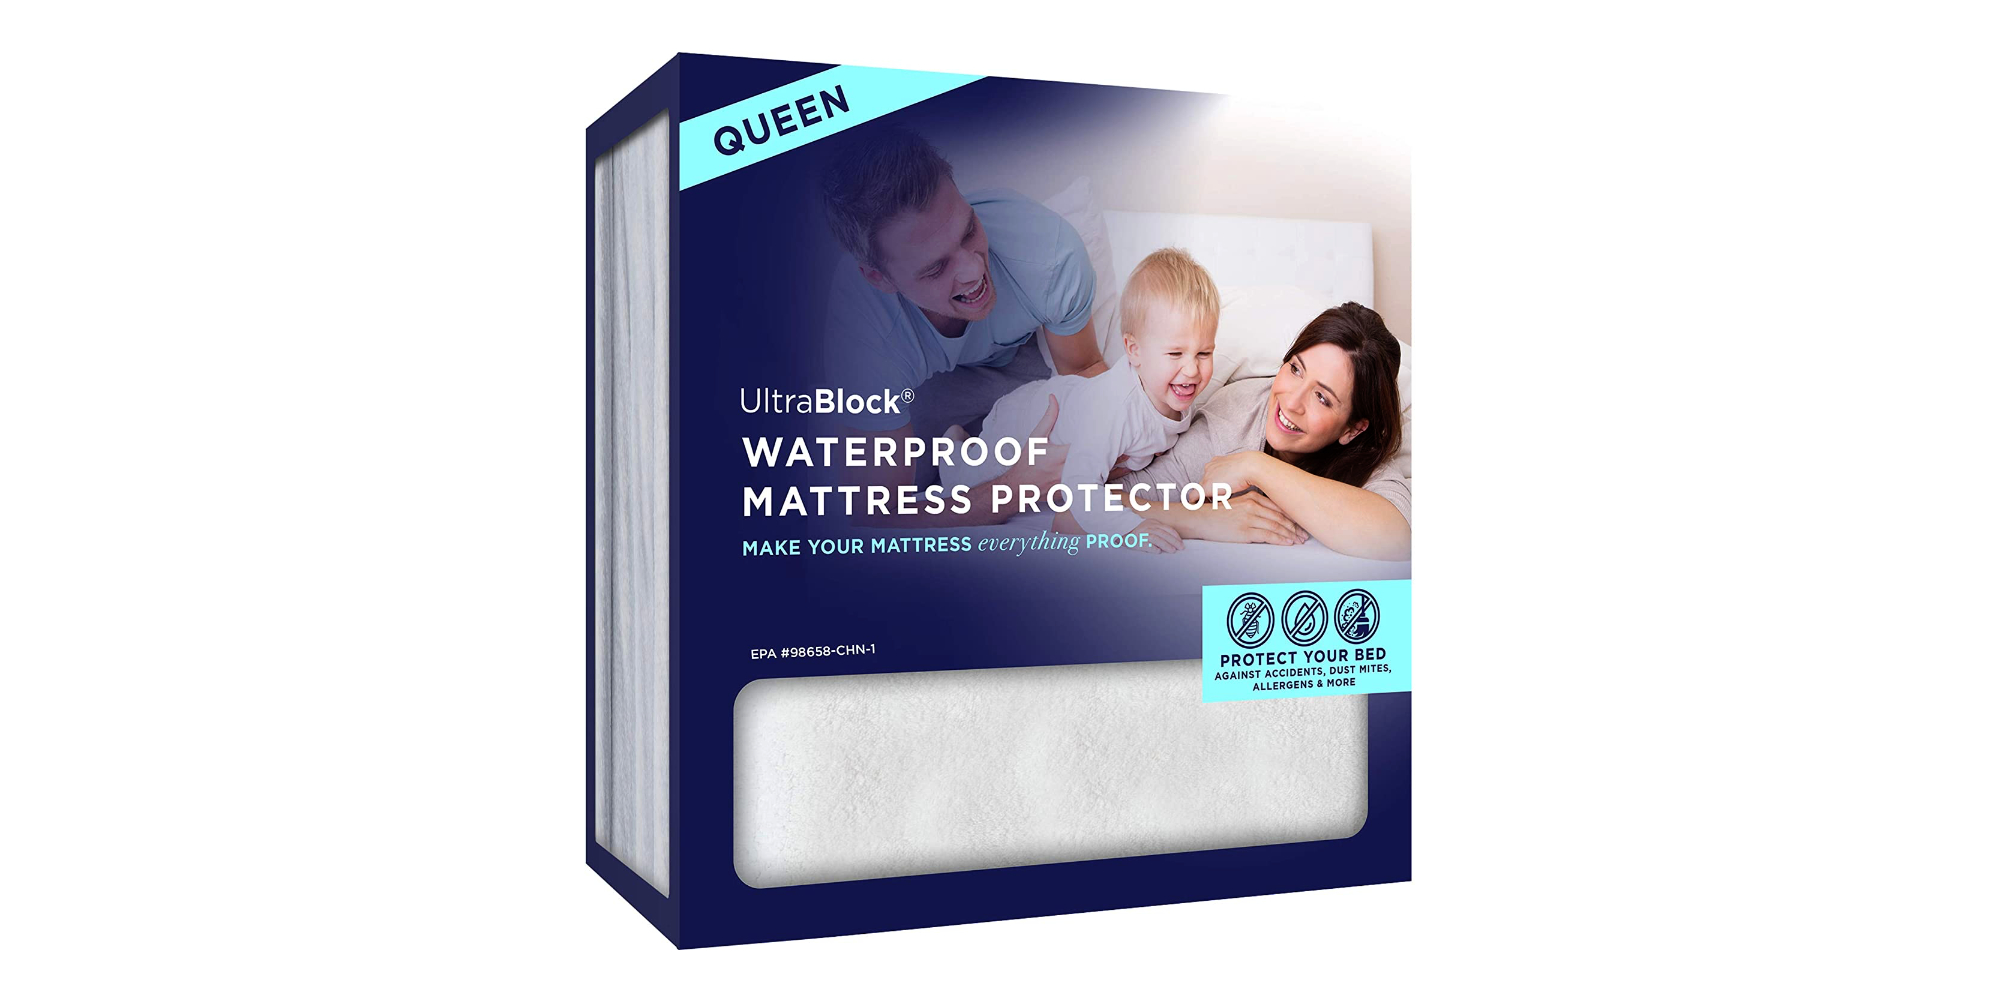 waterproof queen mattress covers at walmart